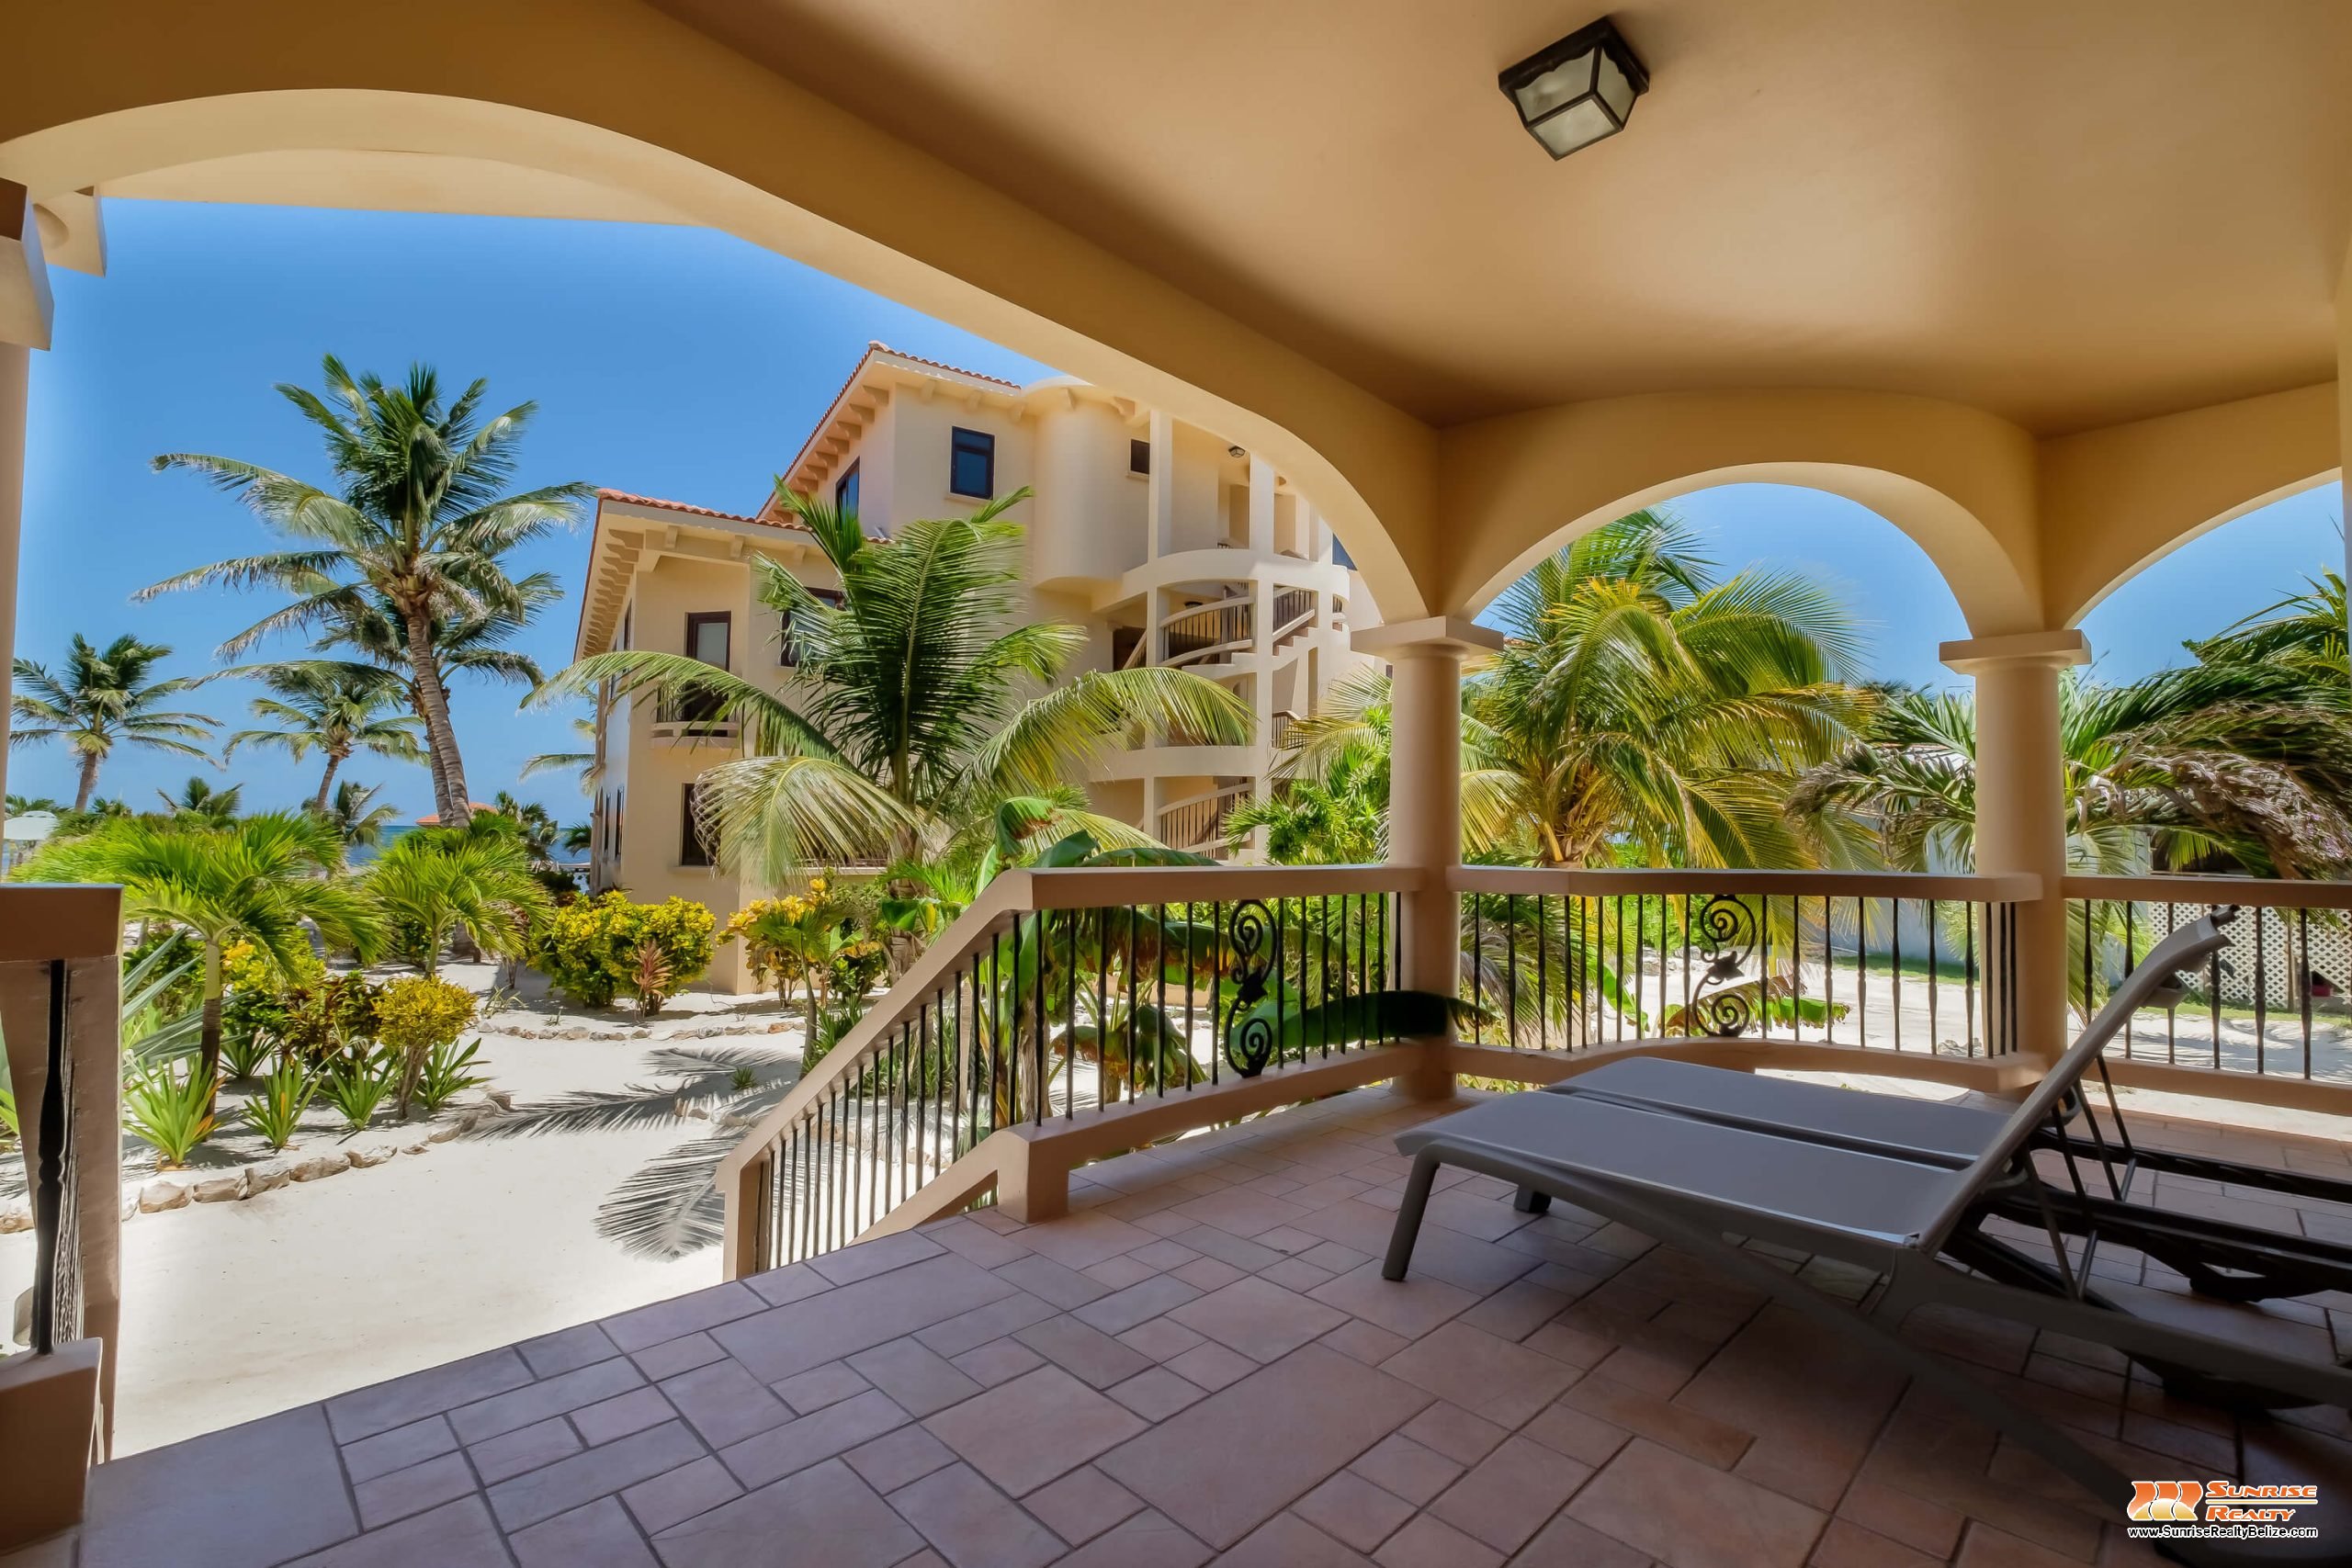 Coco Beach Resort Seaview Suite – New Listing!